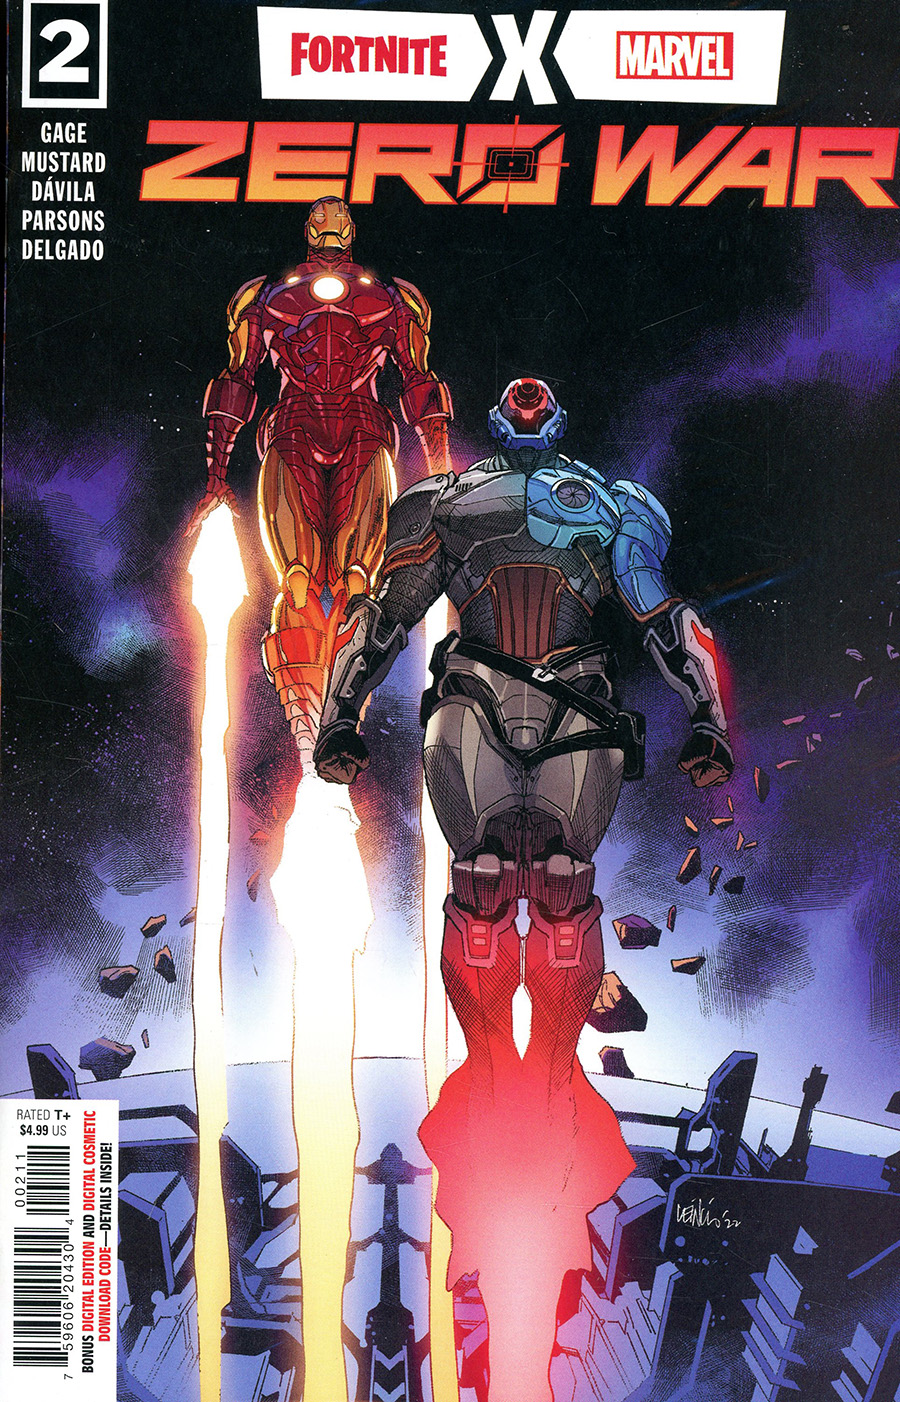 Fortnite x Marvel Zero War #2 Cover A Regular Leinil Francis Yu Cover